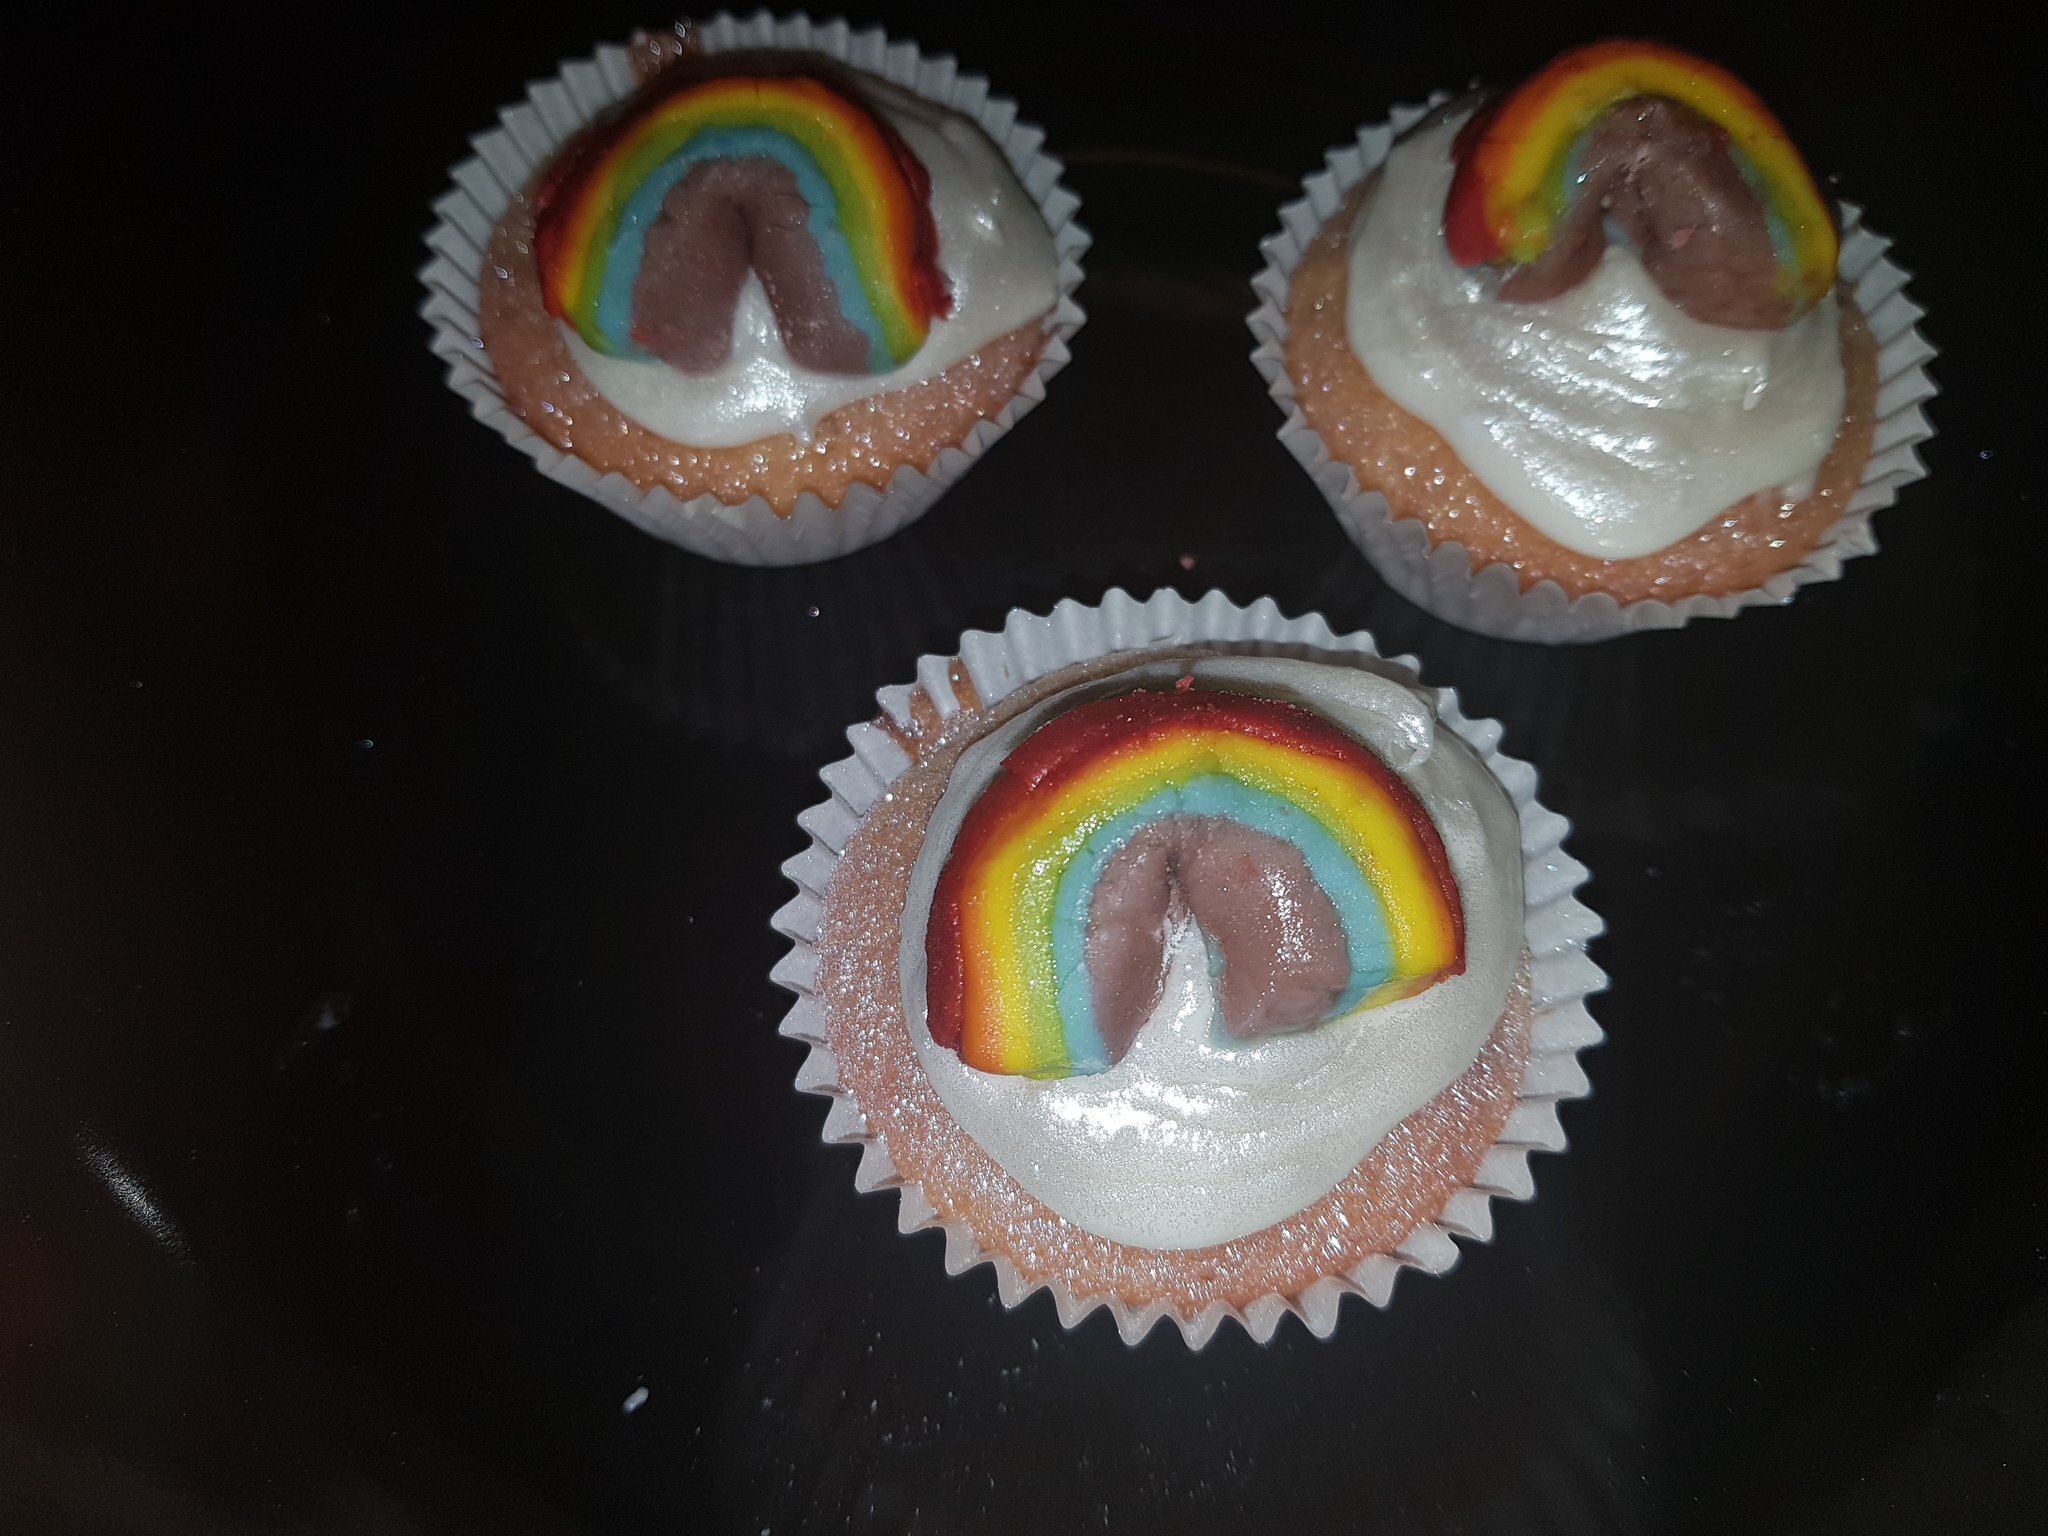 Kirsty Lawrenz's rainbow cupcakes